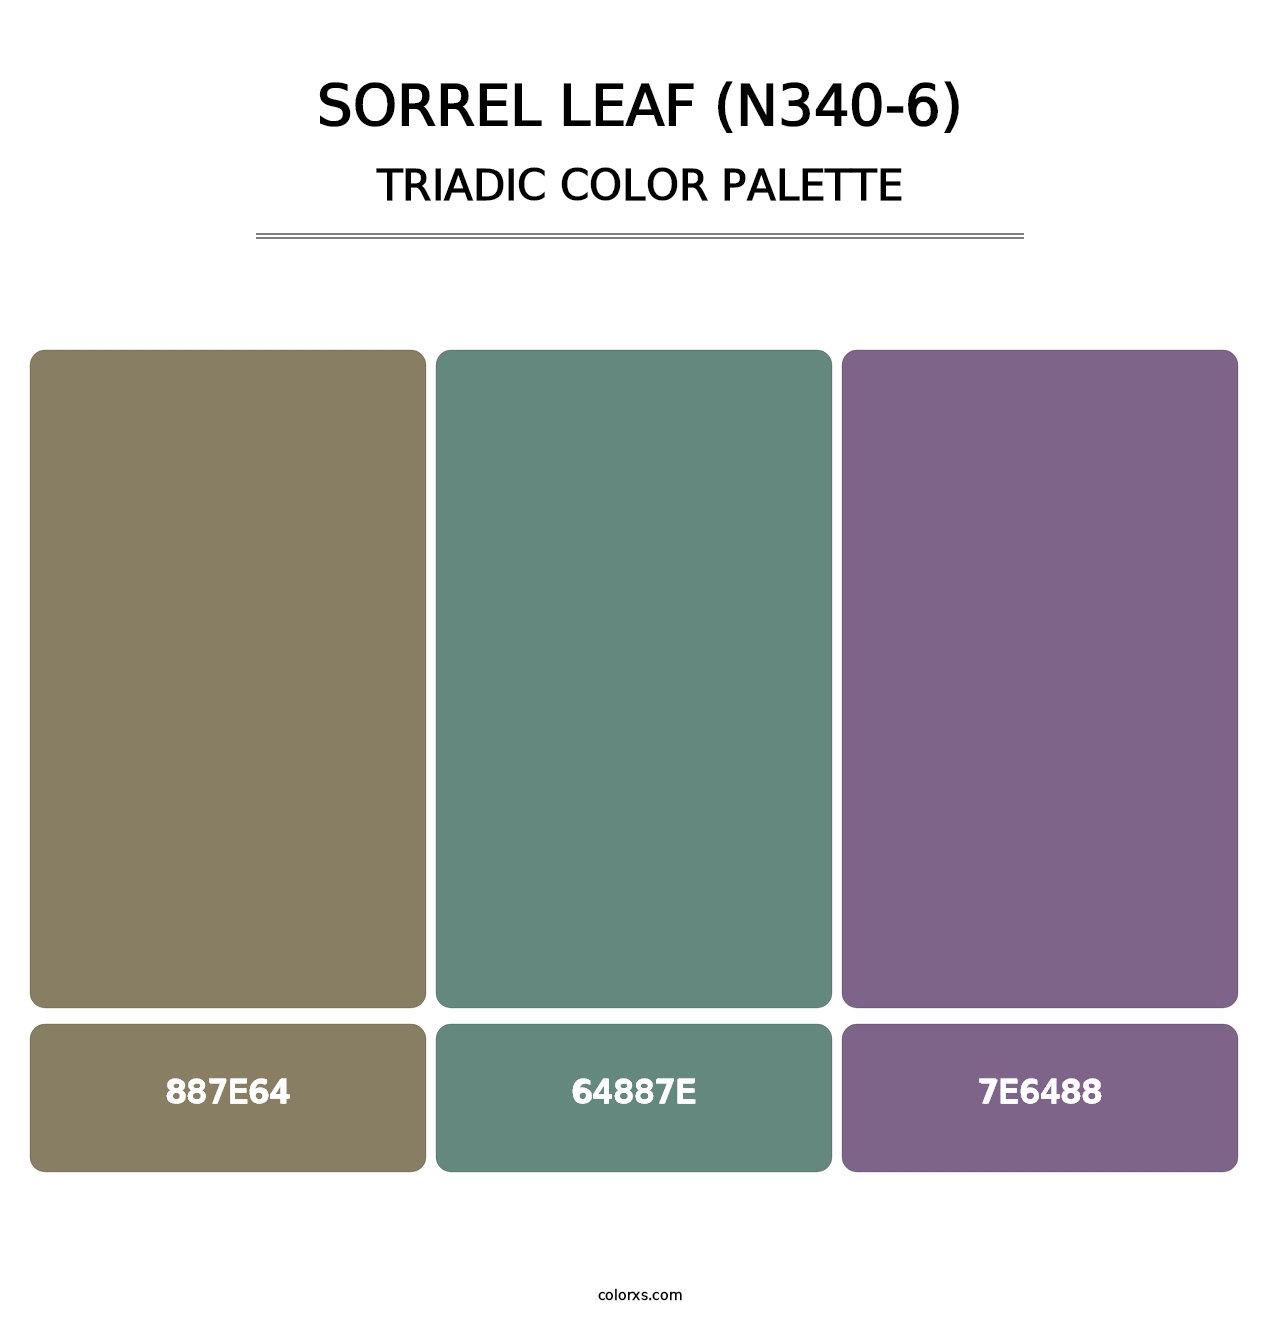 Sorrel Leaf (N340-6) - Triadic Color Palette